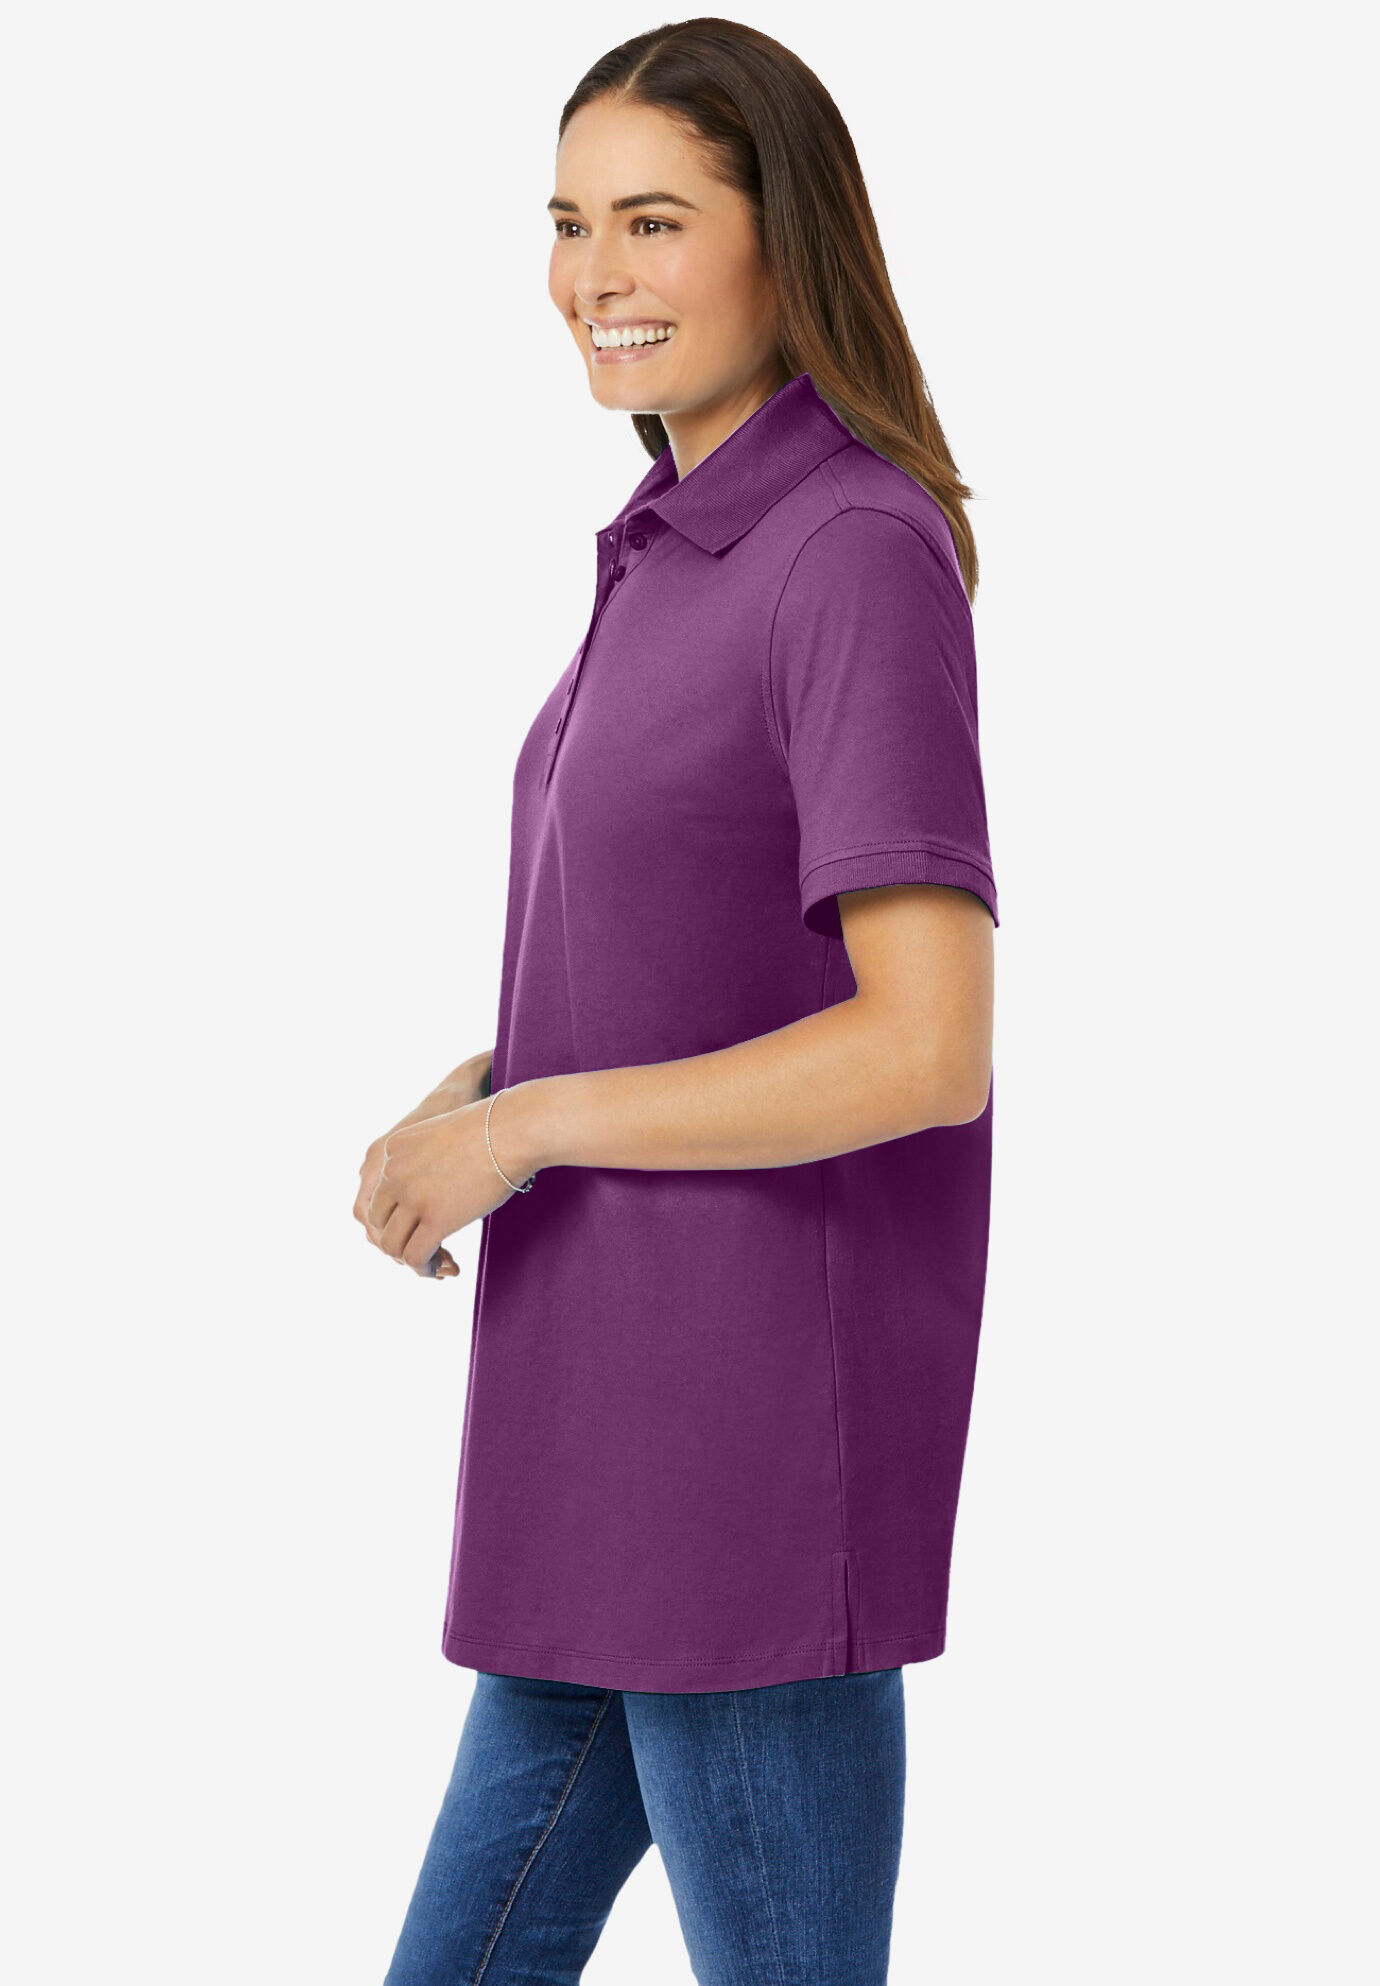 INSIDE Womens 7spoc04 Short Sleeve Polo Shirt